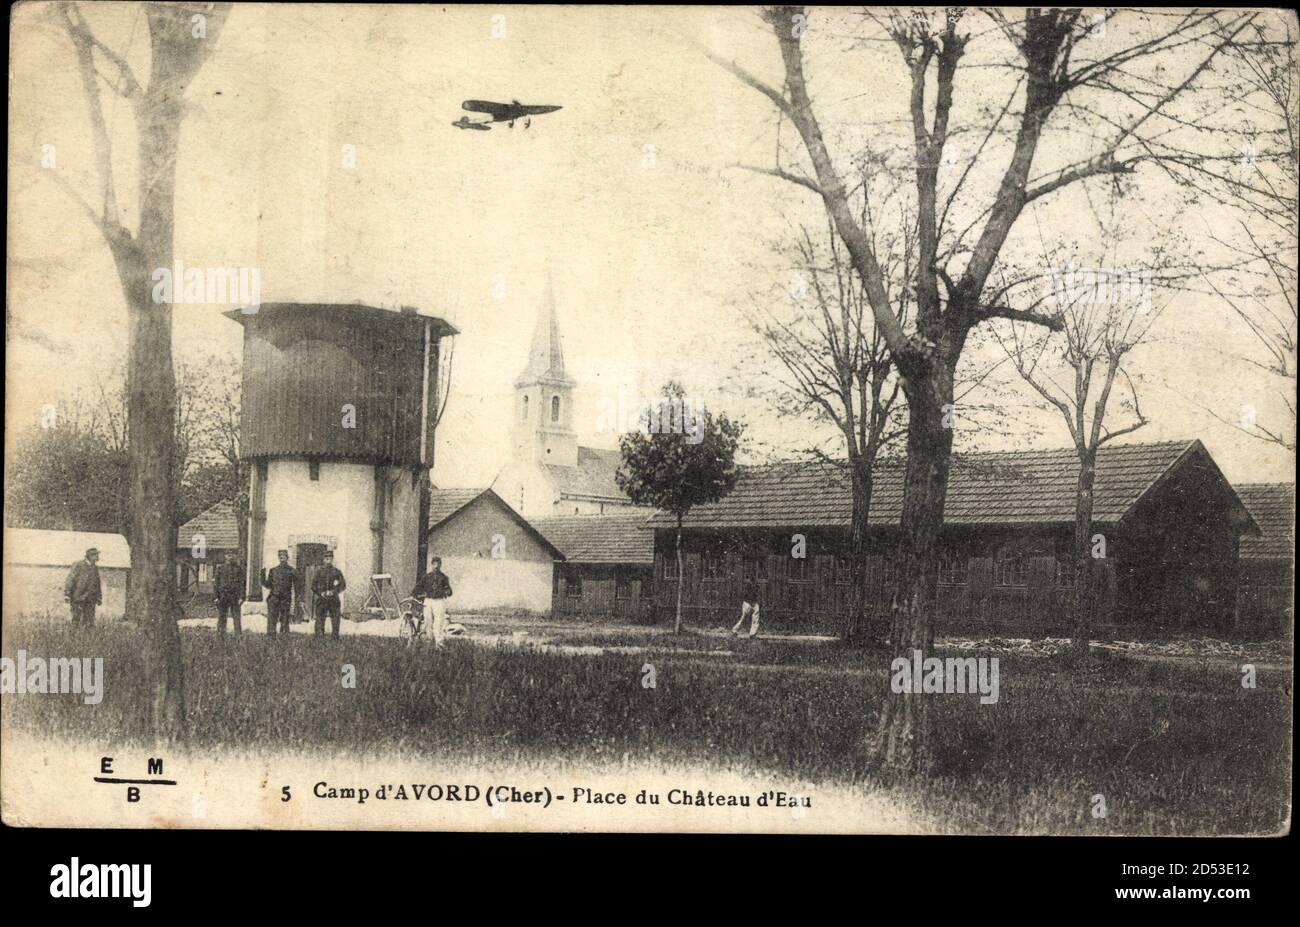 Camp dAvord Cher, Place du Château dEau, Kampfflugzeug, Wasserturm, Kirche | usage worldwide Stock Photo